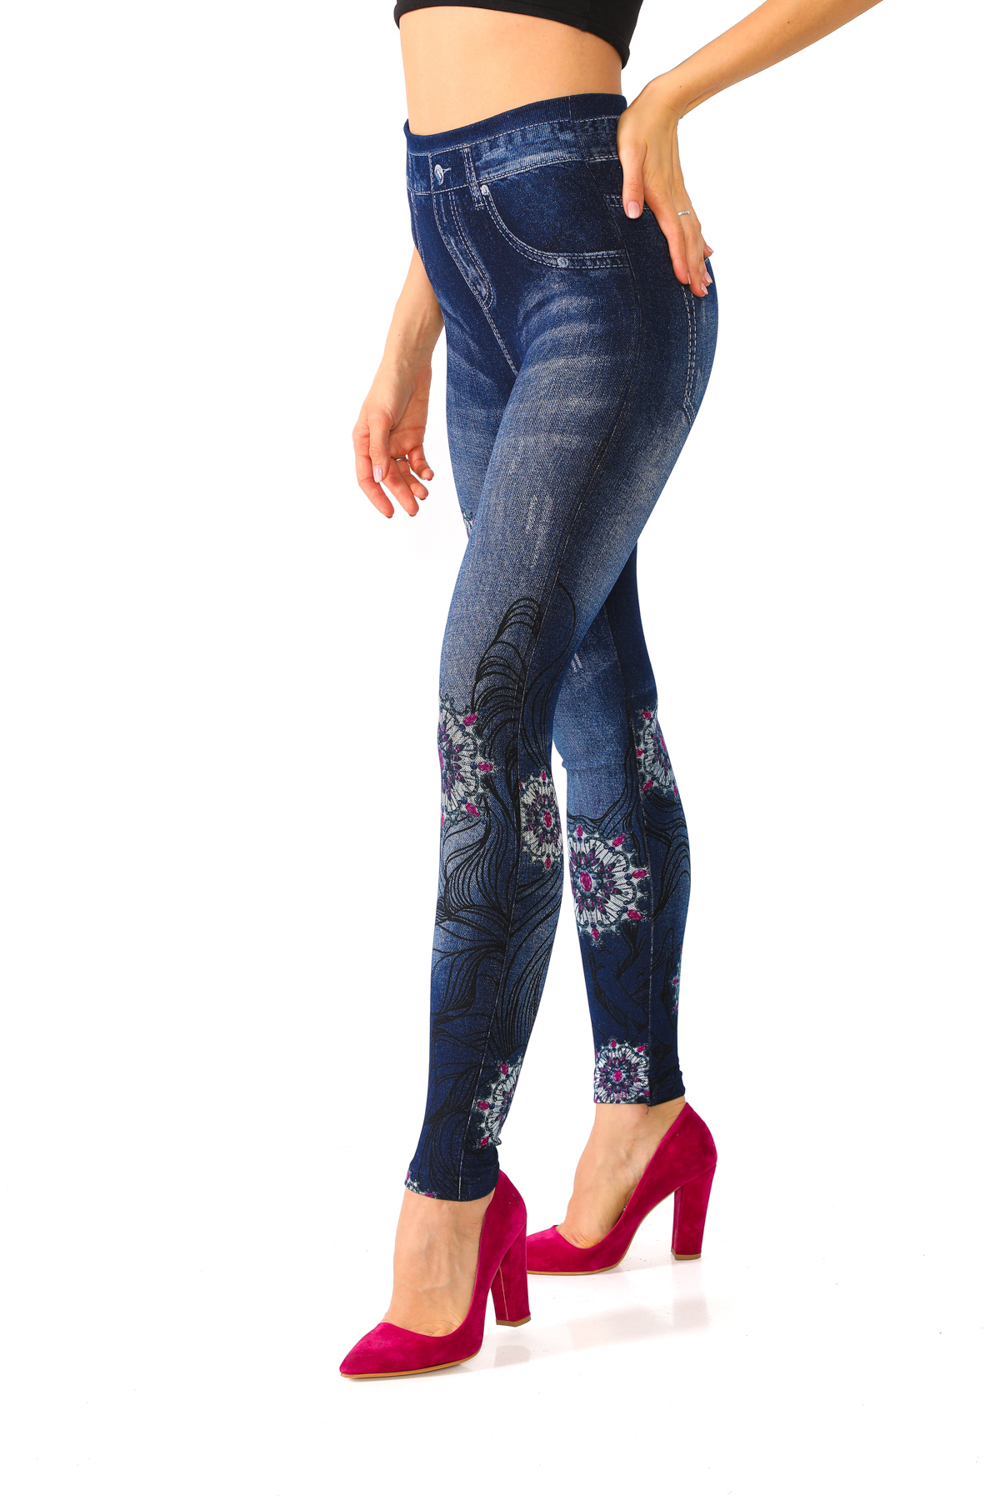 ❤️ Womens Floral Skinny Denim Leggings High Waist Jeggings Jeans